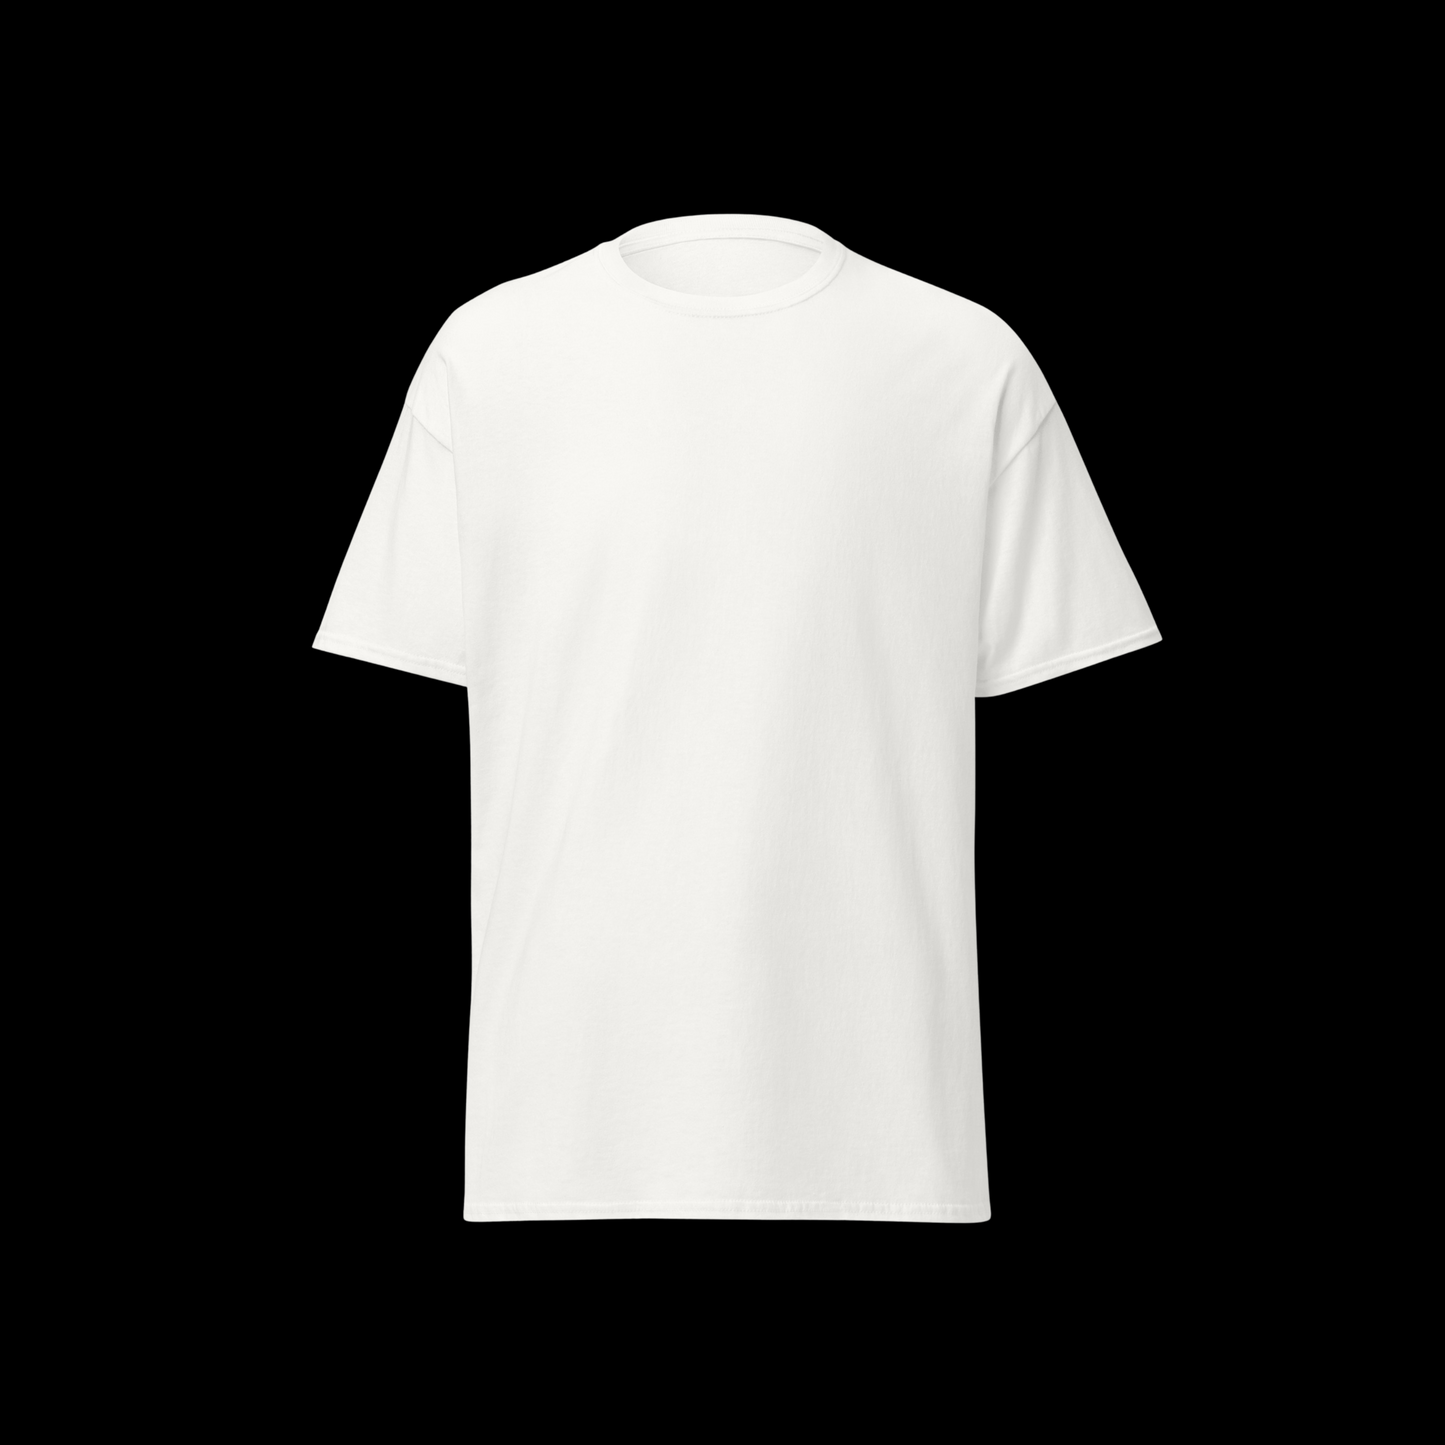 Camiseta black and White estilo 3